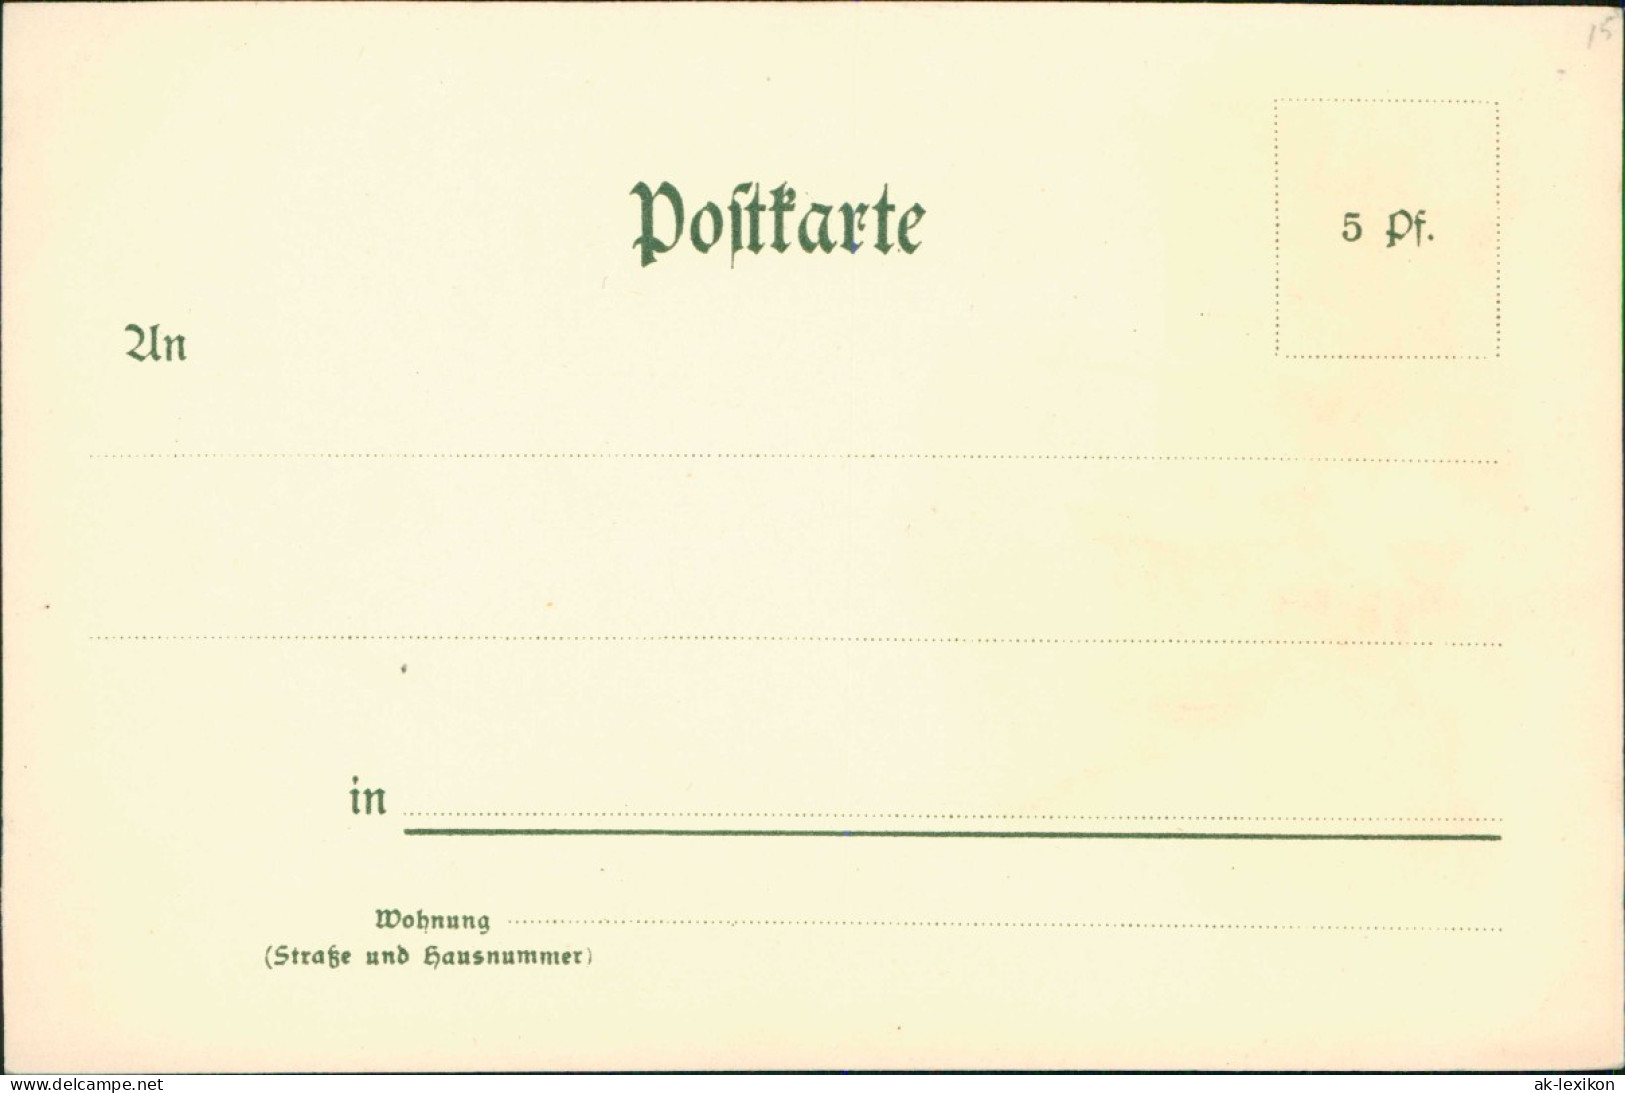 Ansichtskarte  Künstlerkarte Vogelhaus 1907 - Non Classificati